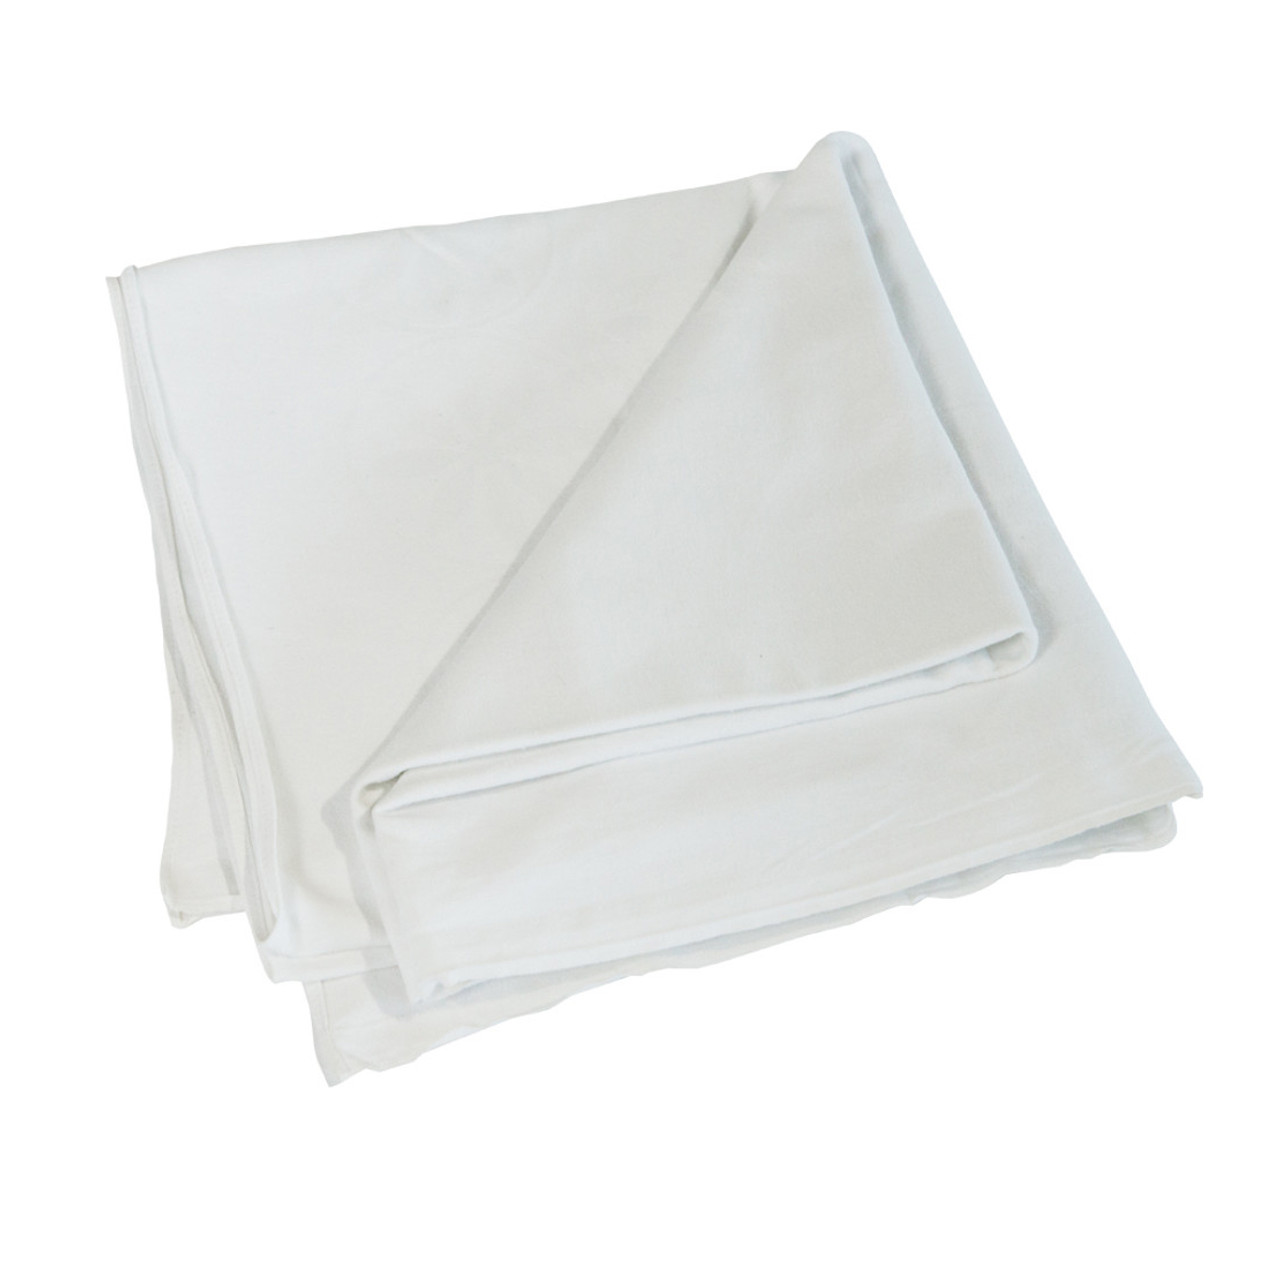 Czech White Table Cloth - Like New